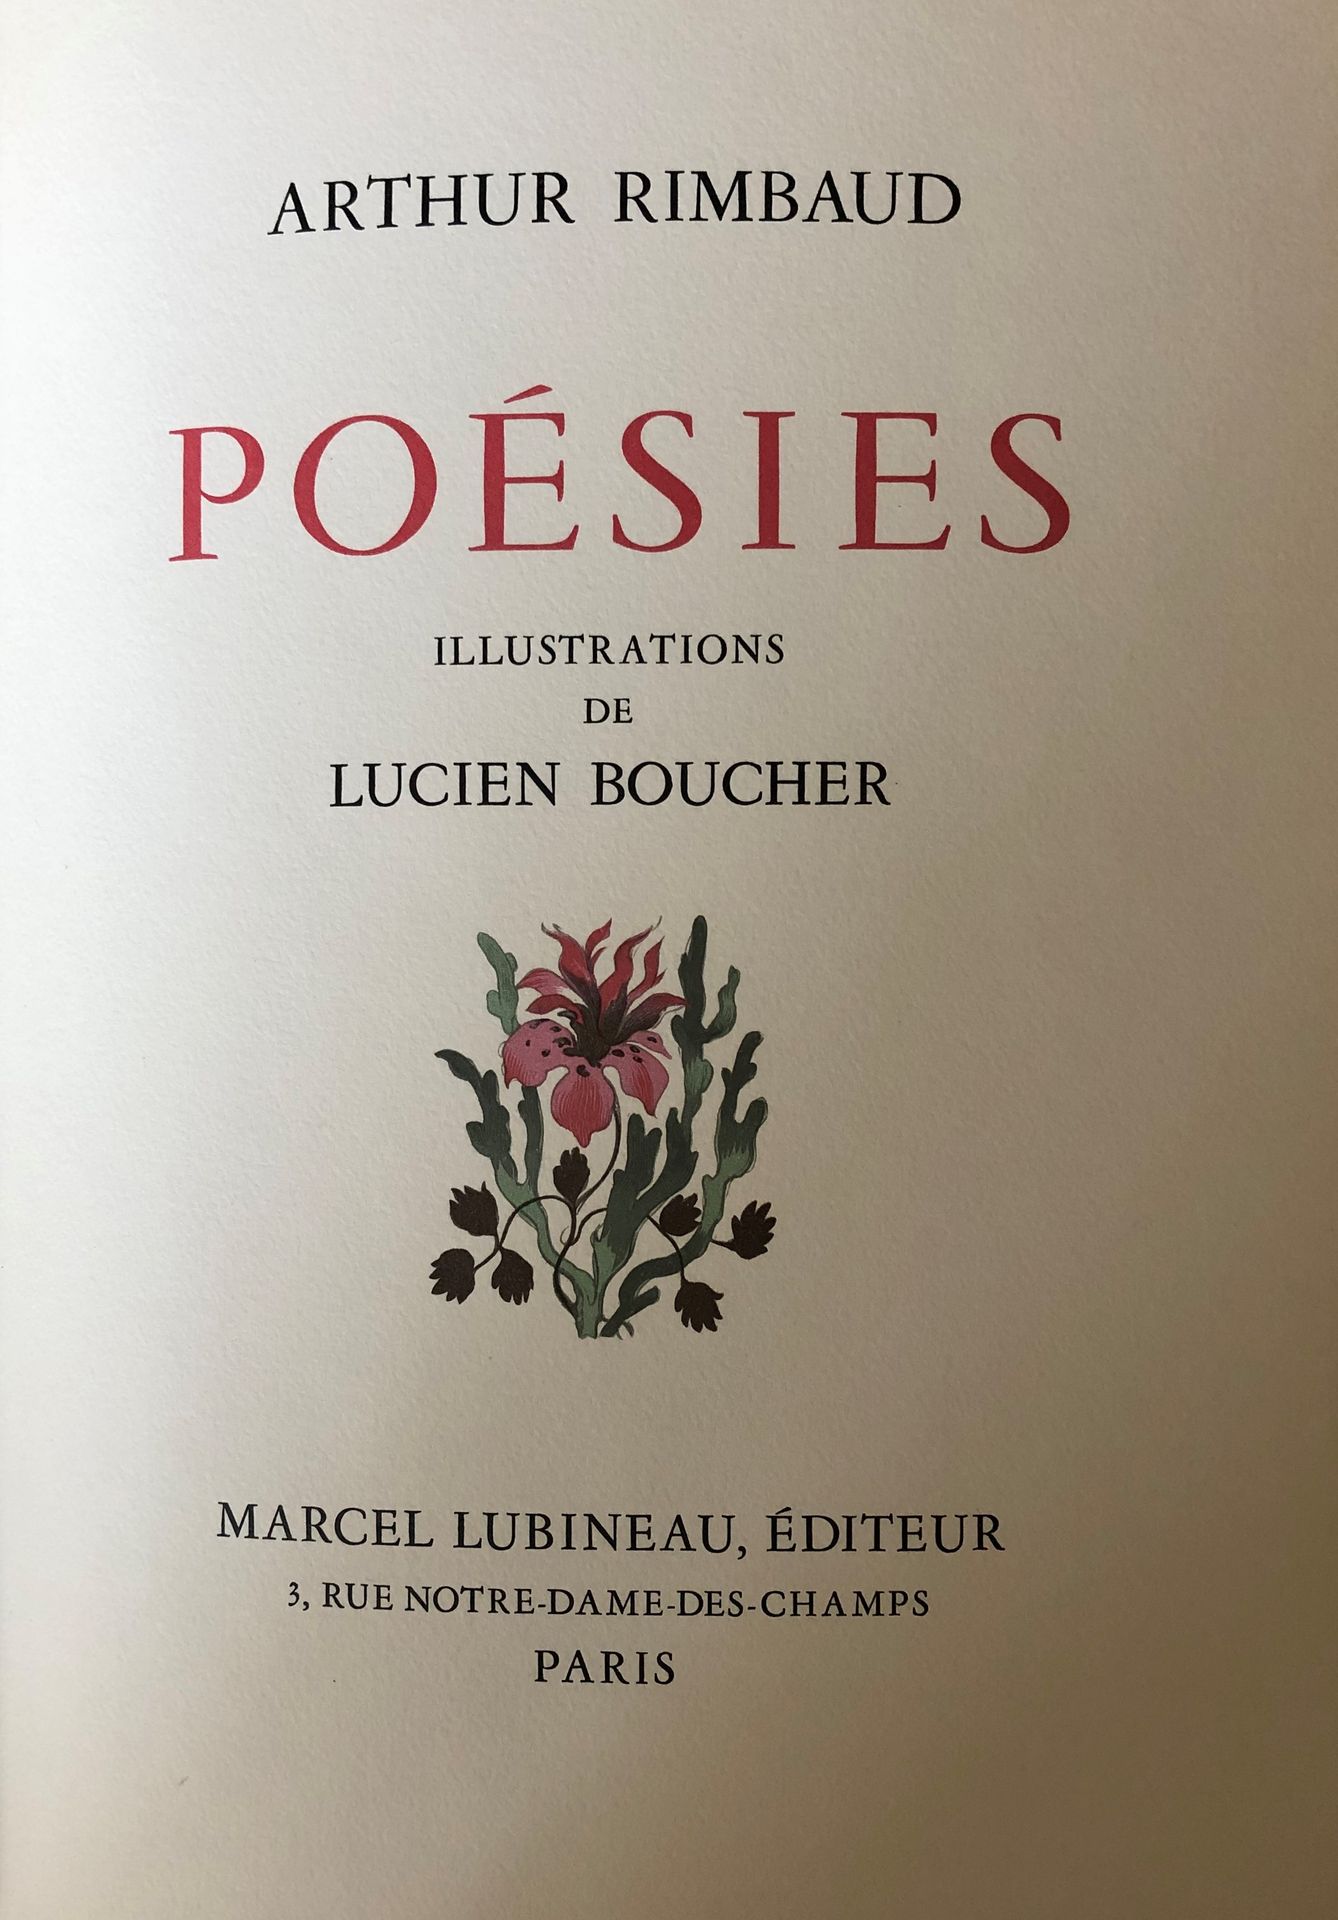 Null Arthur RIMBAUD, Les poésies, illustrated by Lucien Boucher, Marcel Lubineau&hellip;